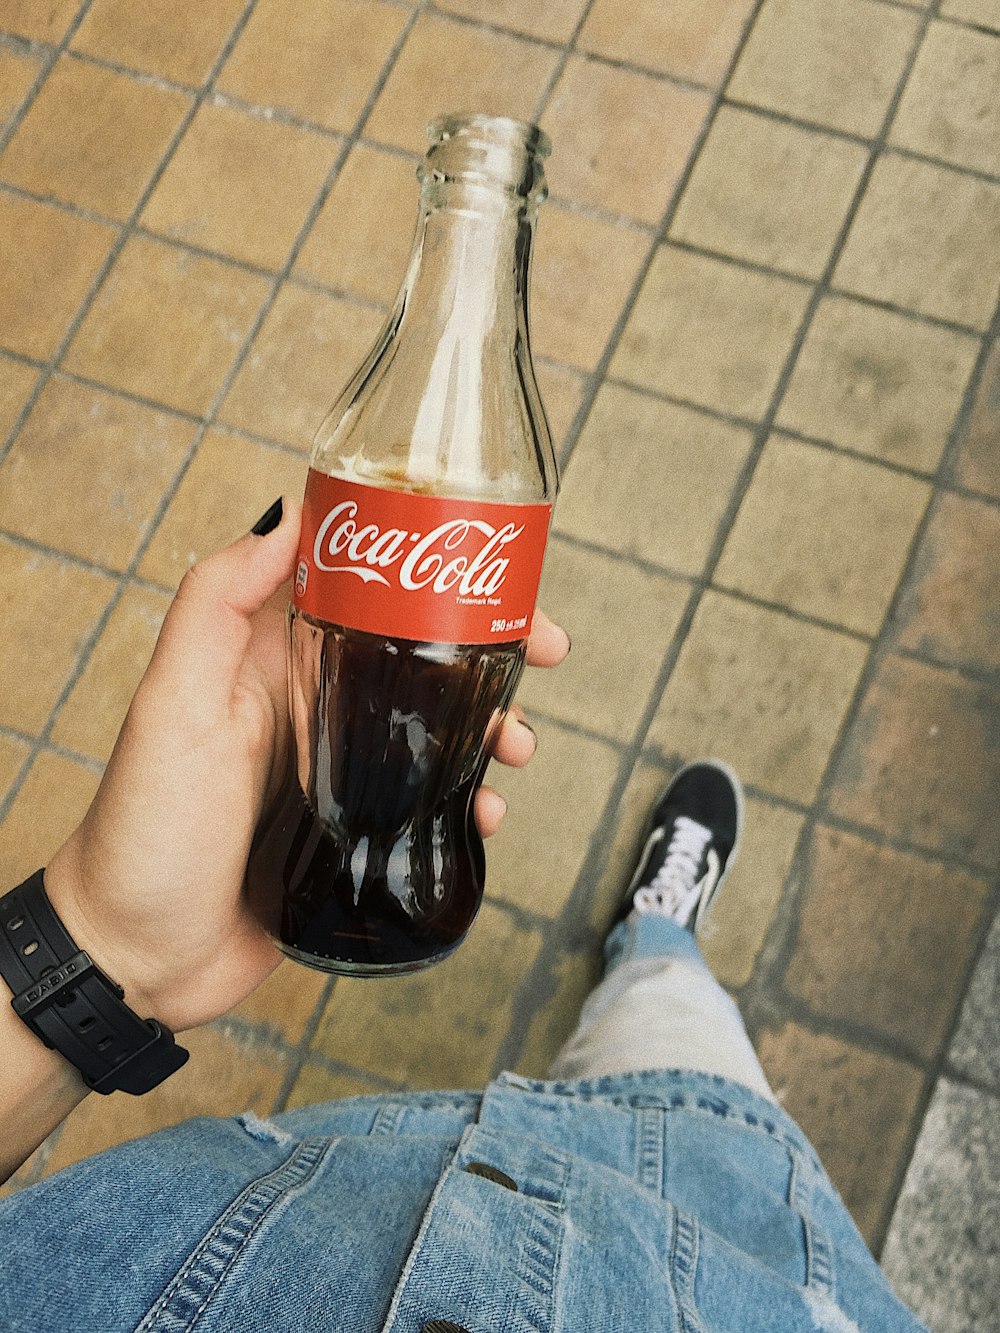 Coca-Cola soda bottle